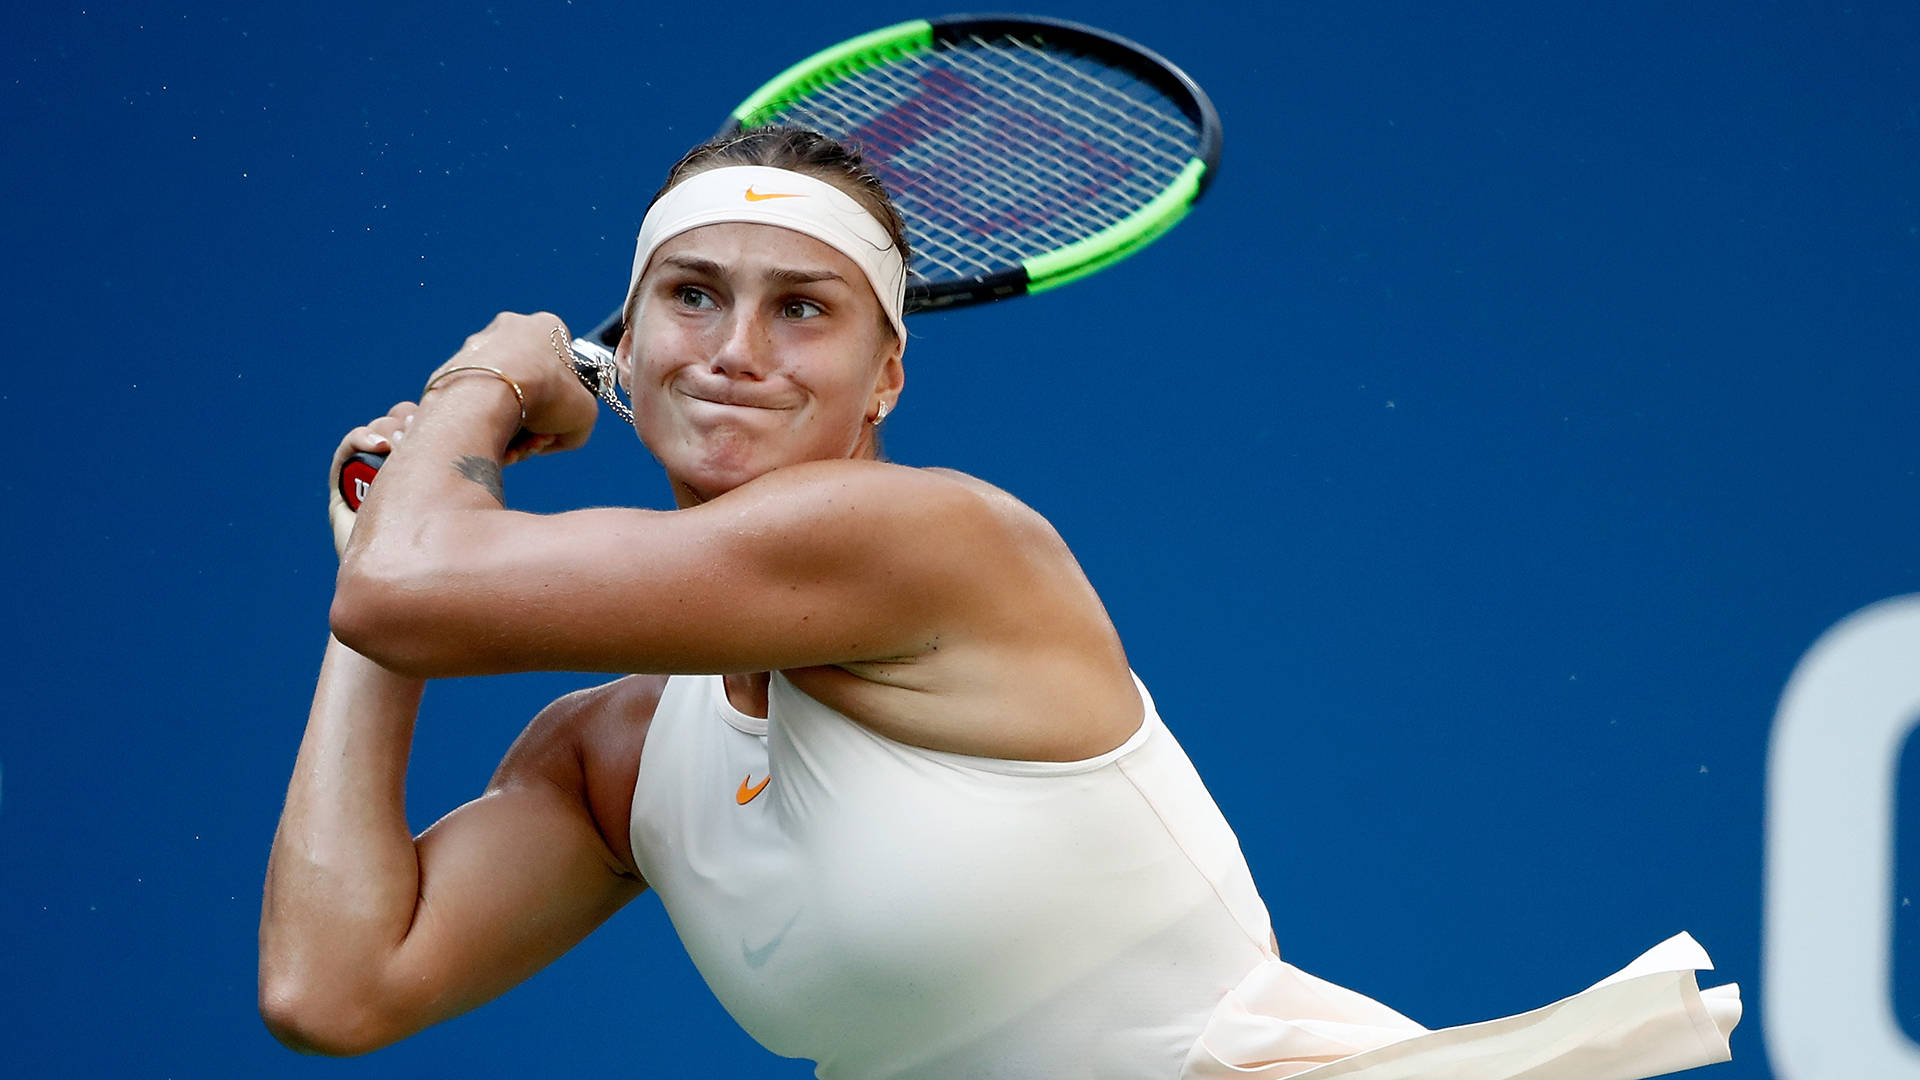 Aryna Sabalenka in Action - Tennis Power Shot Wallpaper